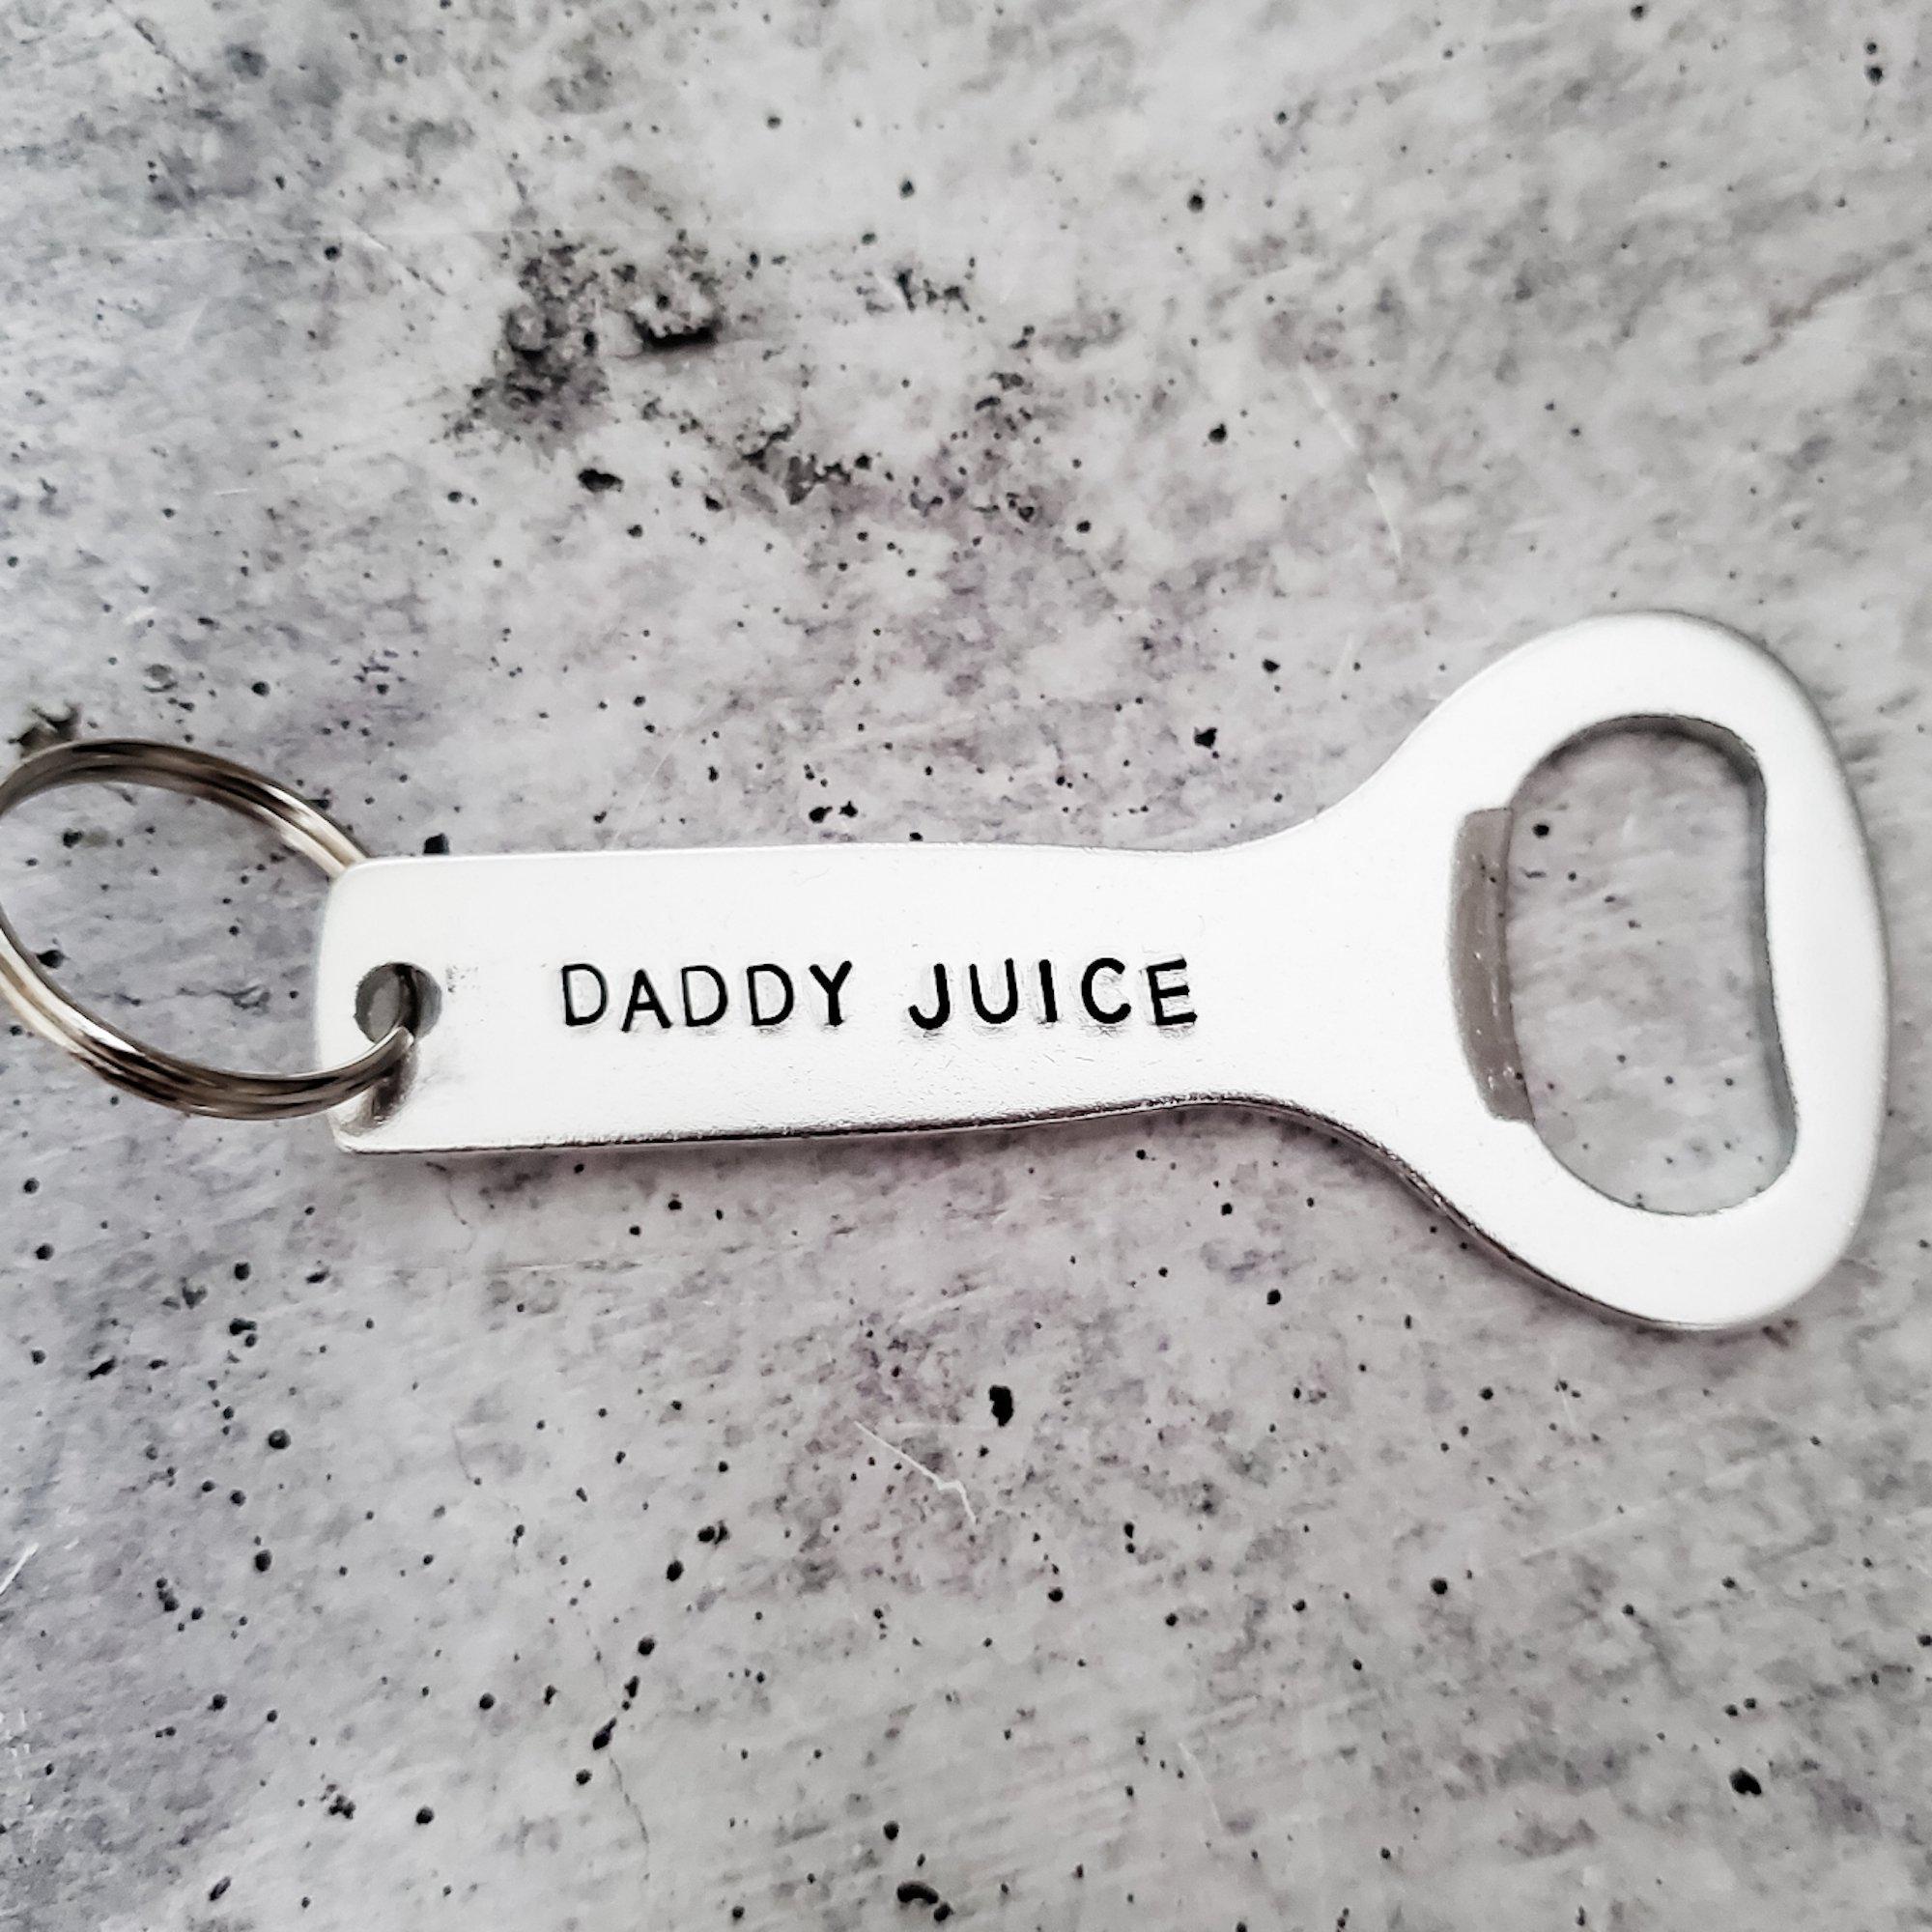 DADDY JUICE Beer Bottle Opener Keychain Salt and Sparkle